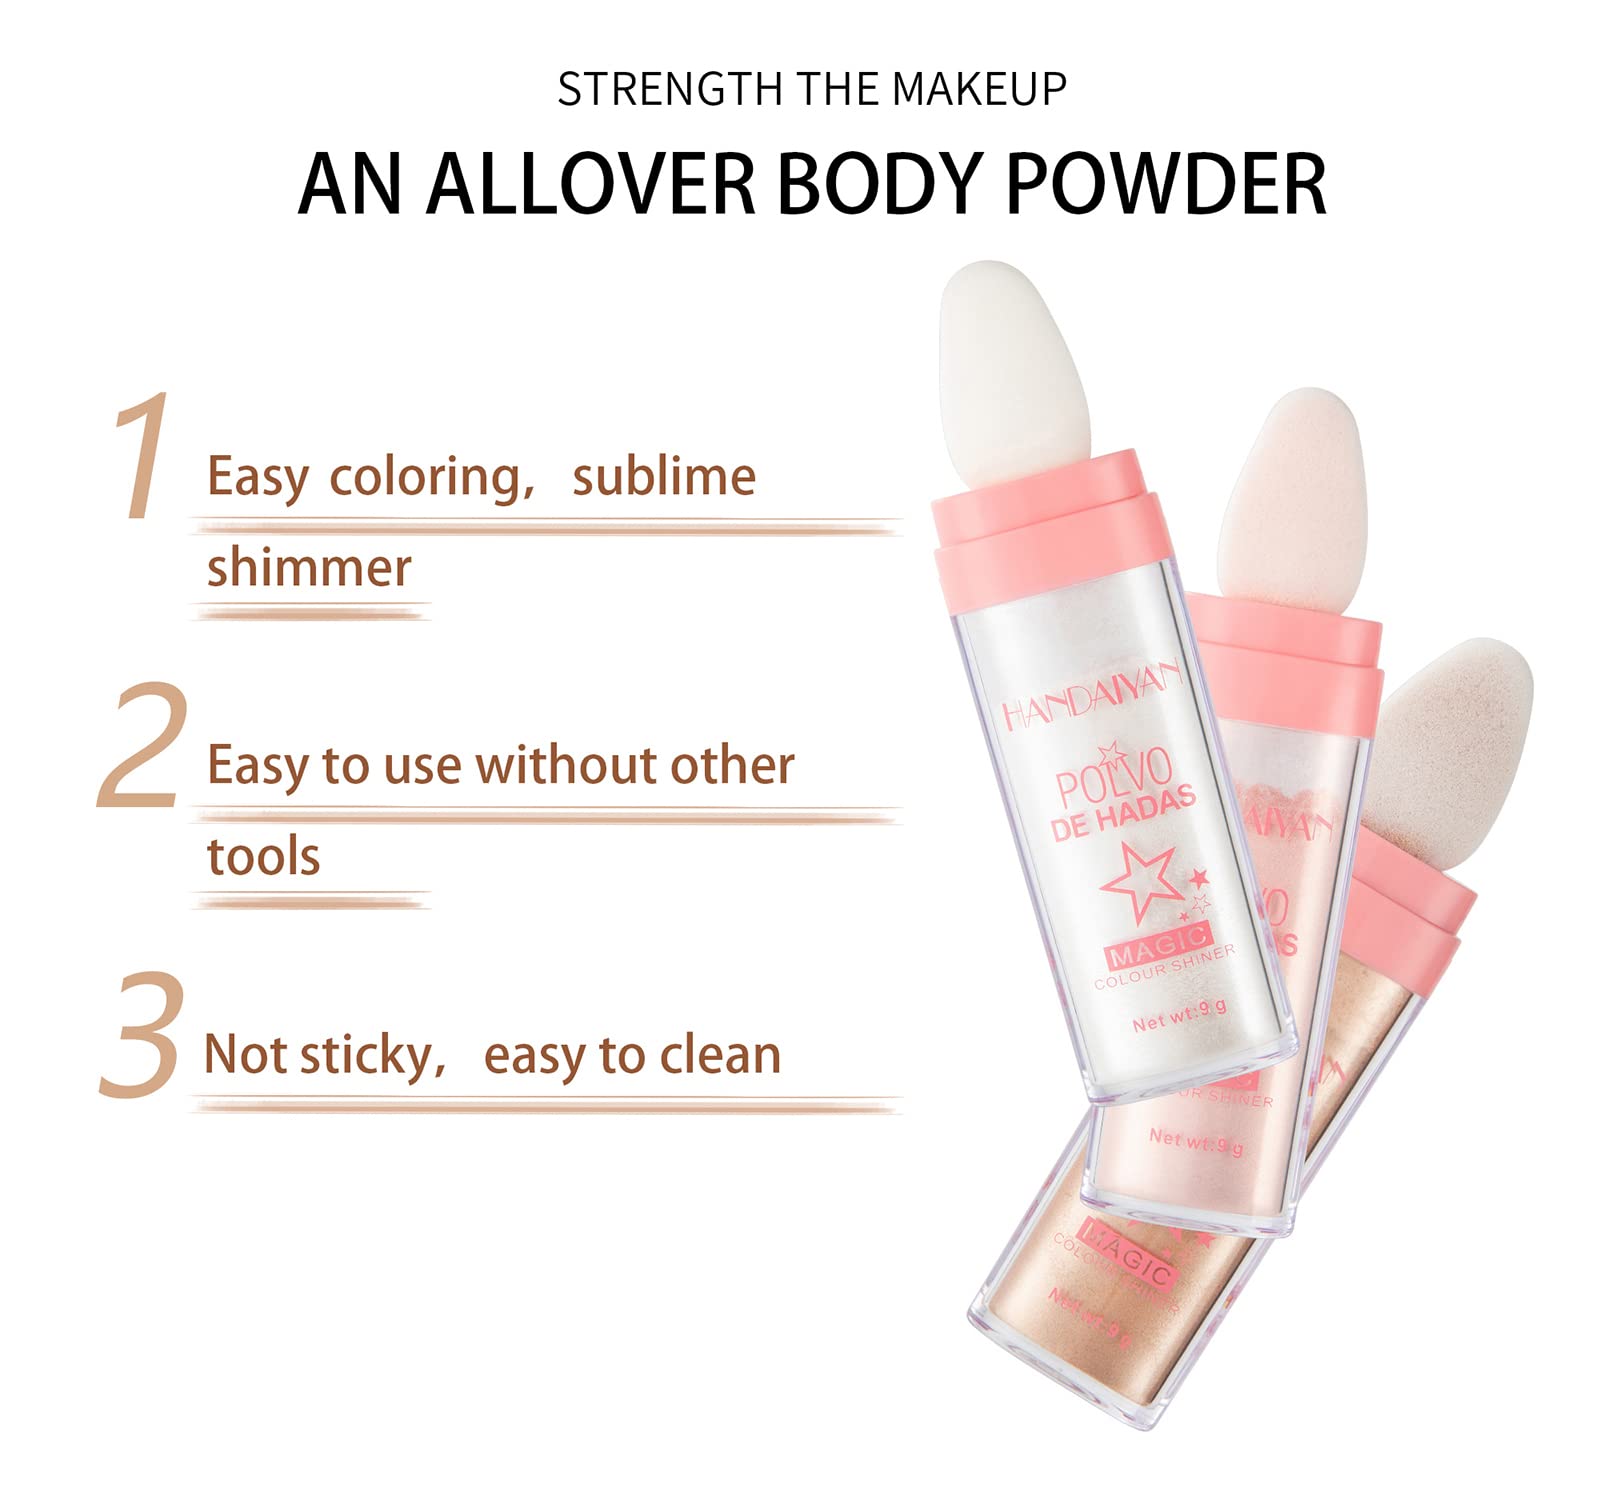 URQT 3 Color Polvo De Hadas Fairy Highlight Patting Powder Highlighter Makeup Body Brightens the Natural Three-dimensional Face Powder Blusher (Trio)